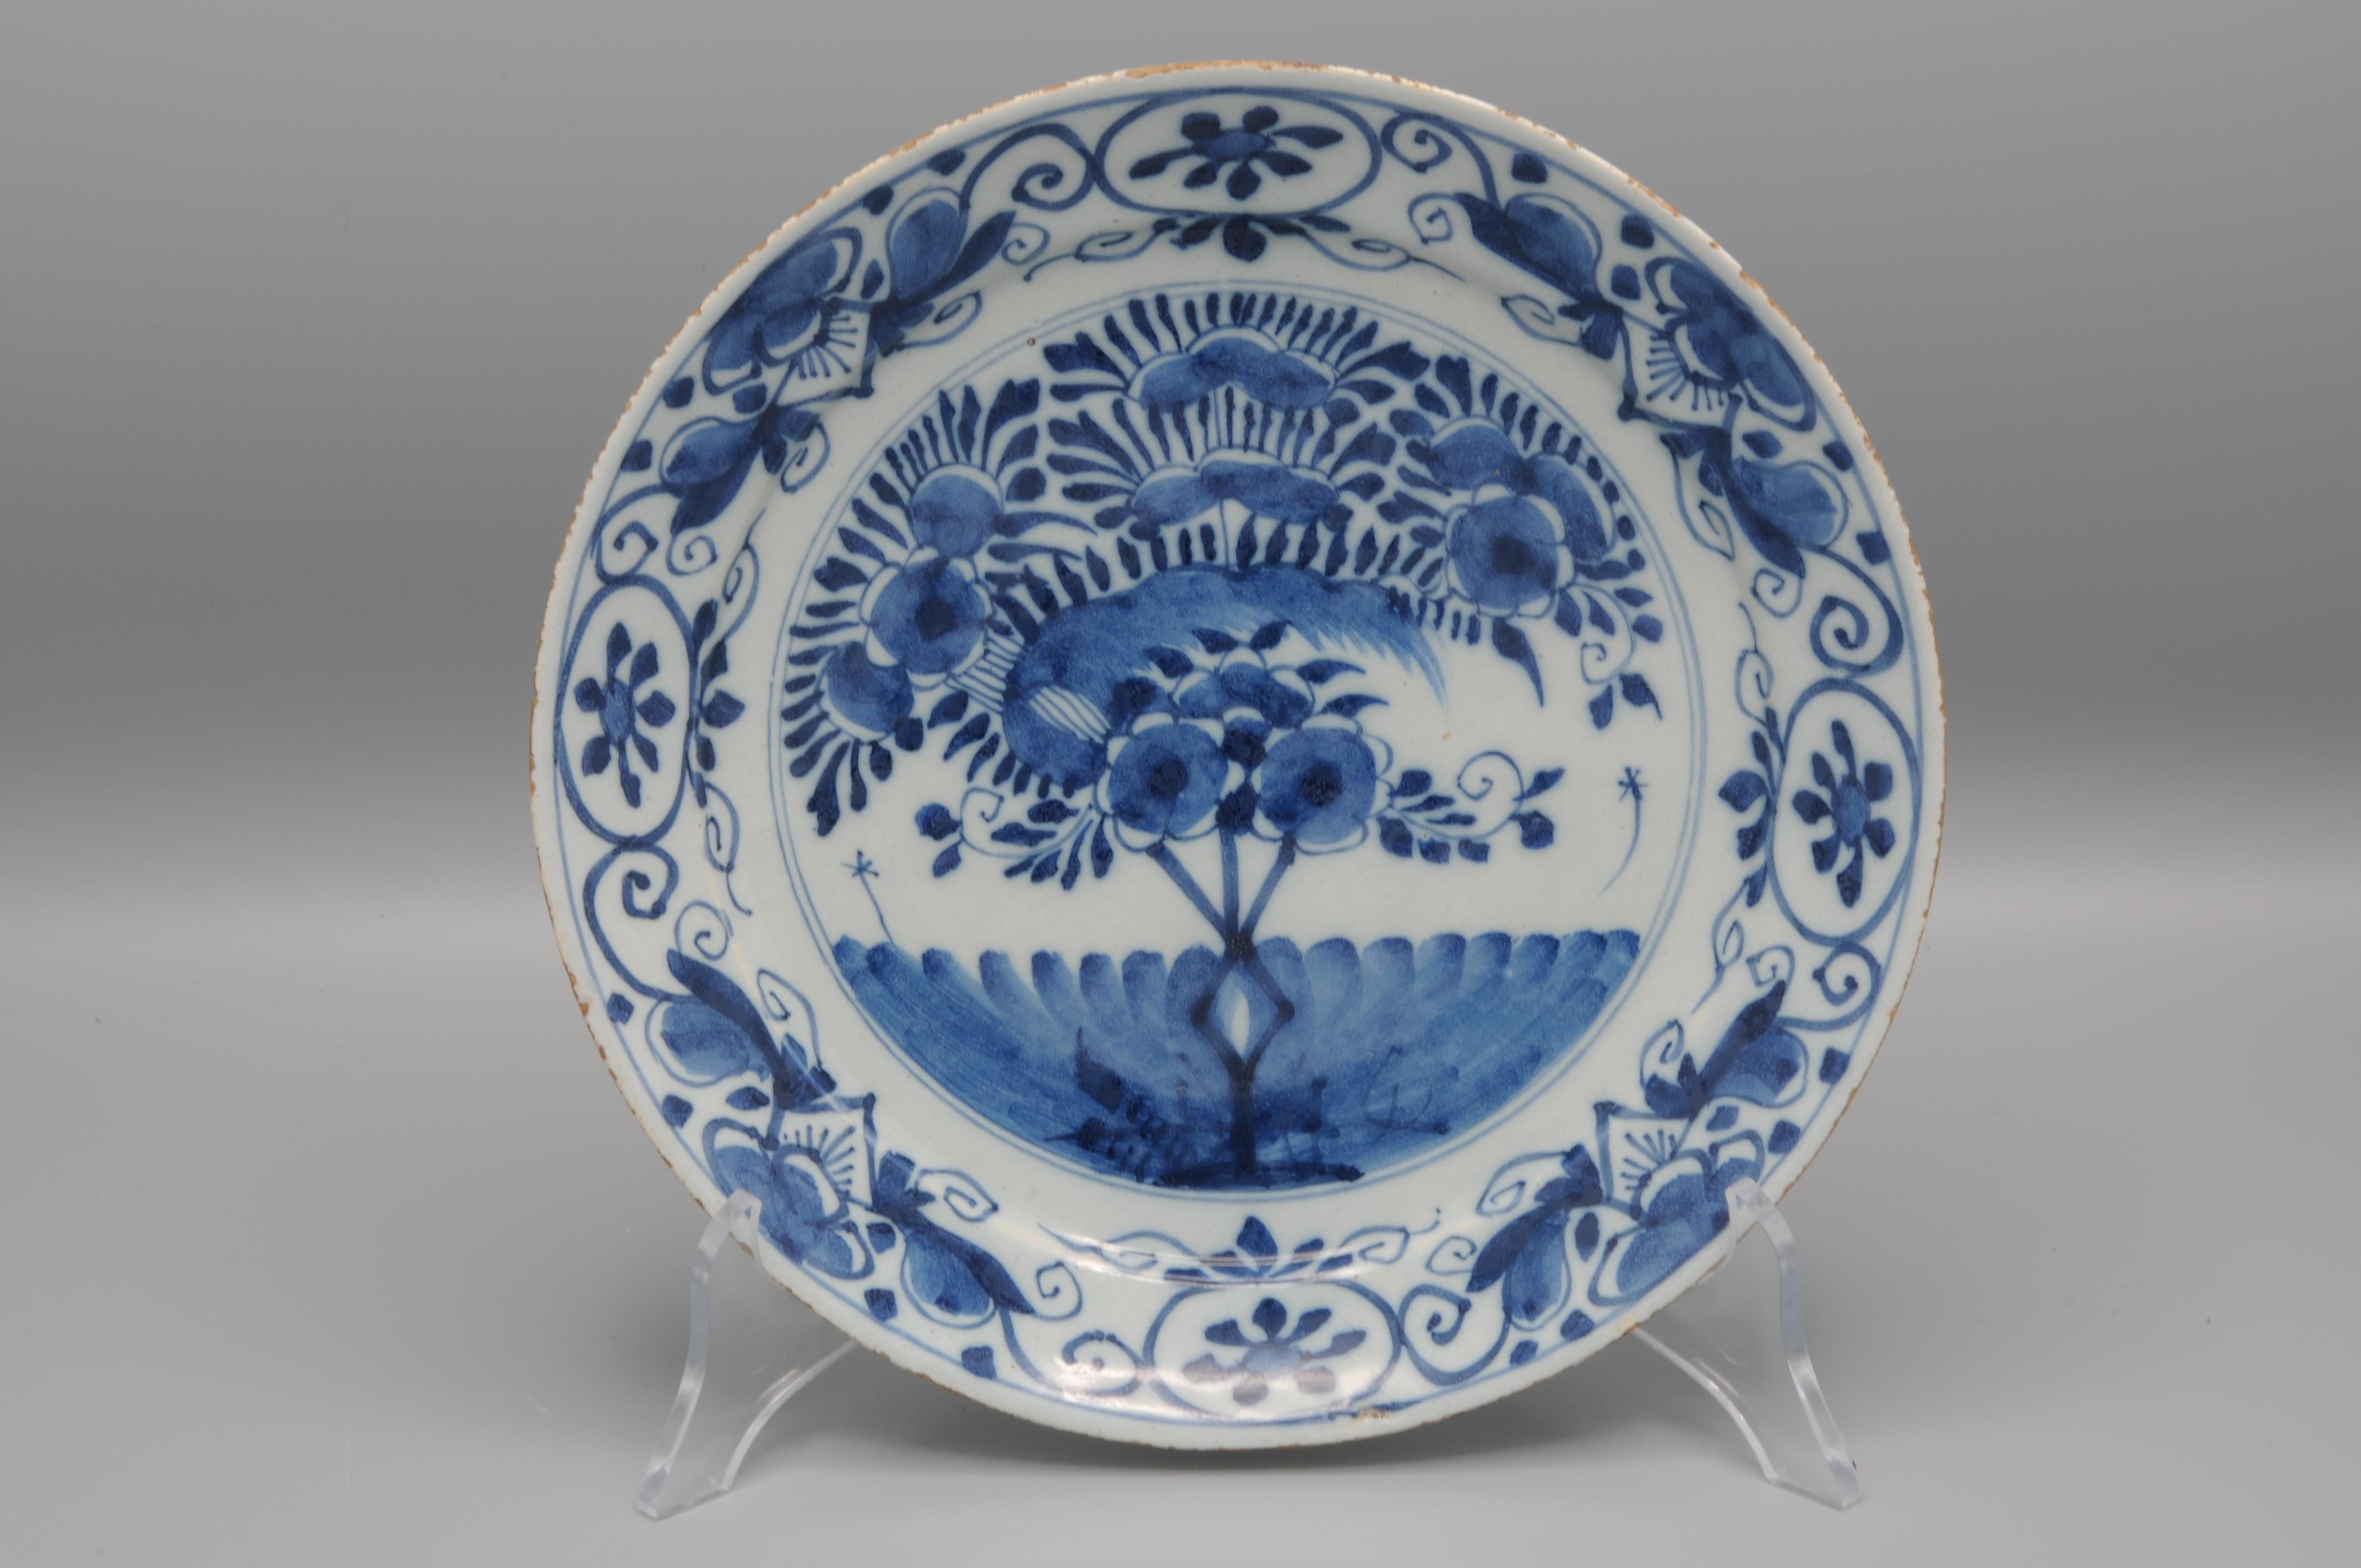 Delft Blue set of 'Tea Tree' plates - mid 18th century For Sale 1